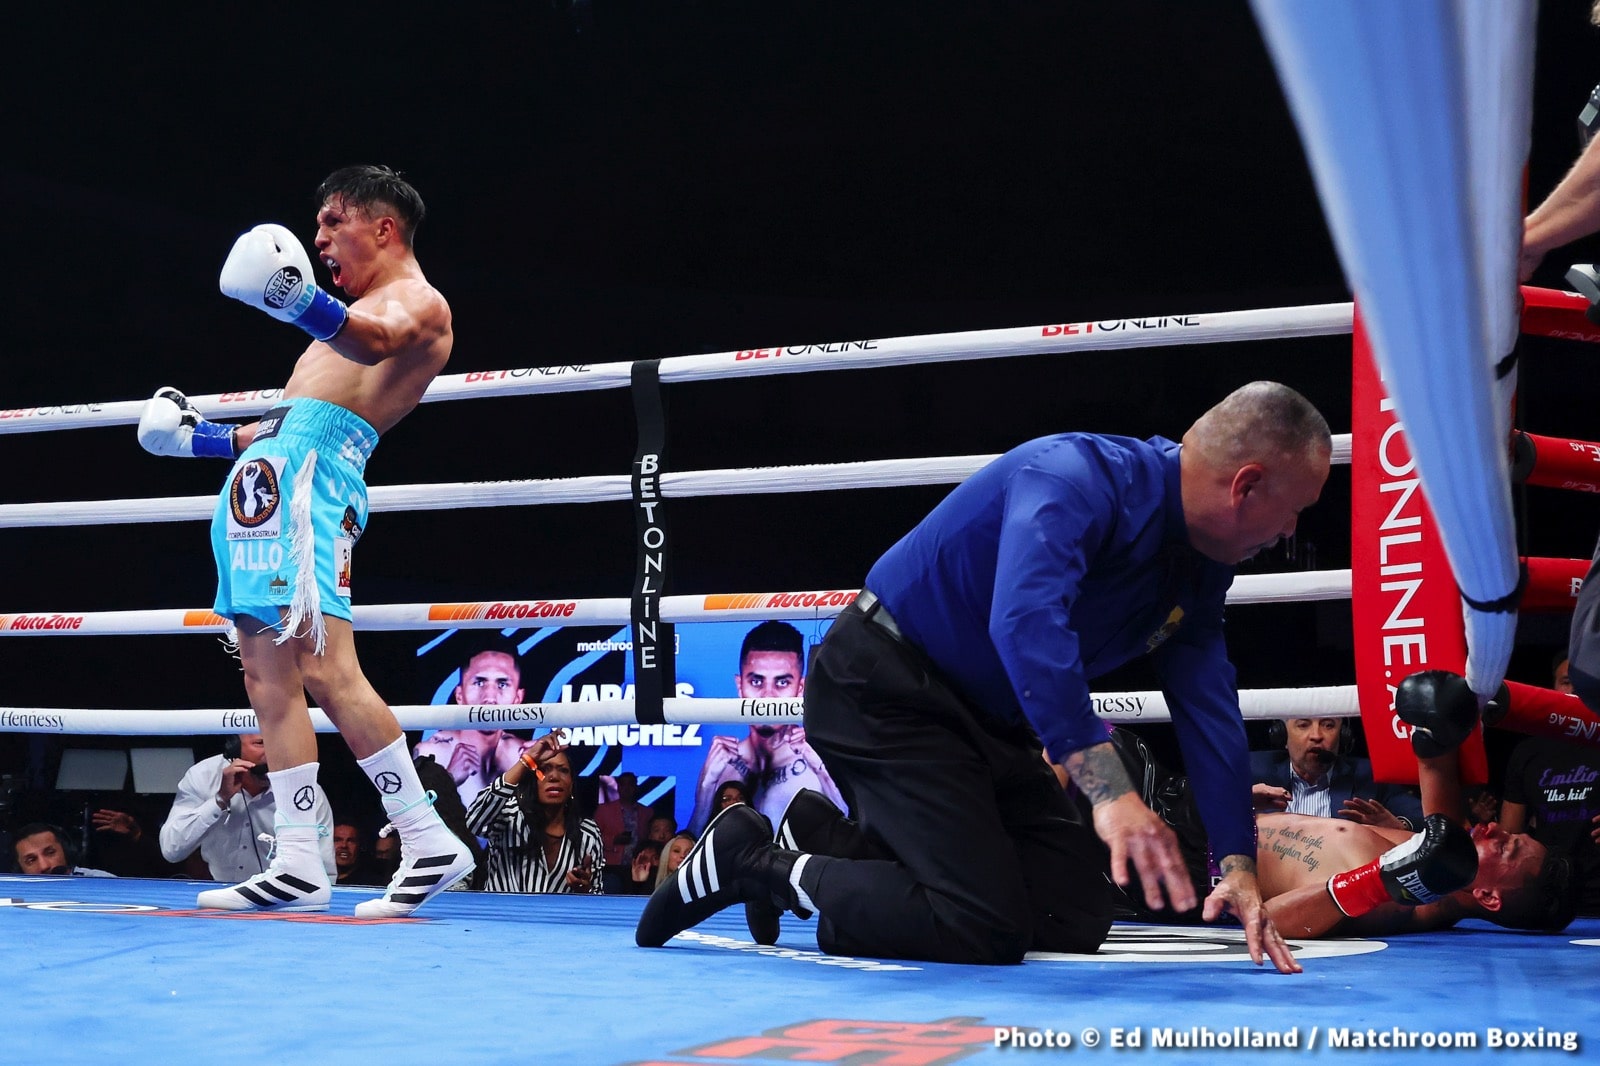 Emilio Sanchez boxing image / photo